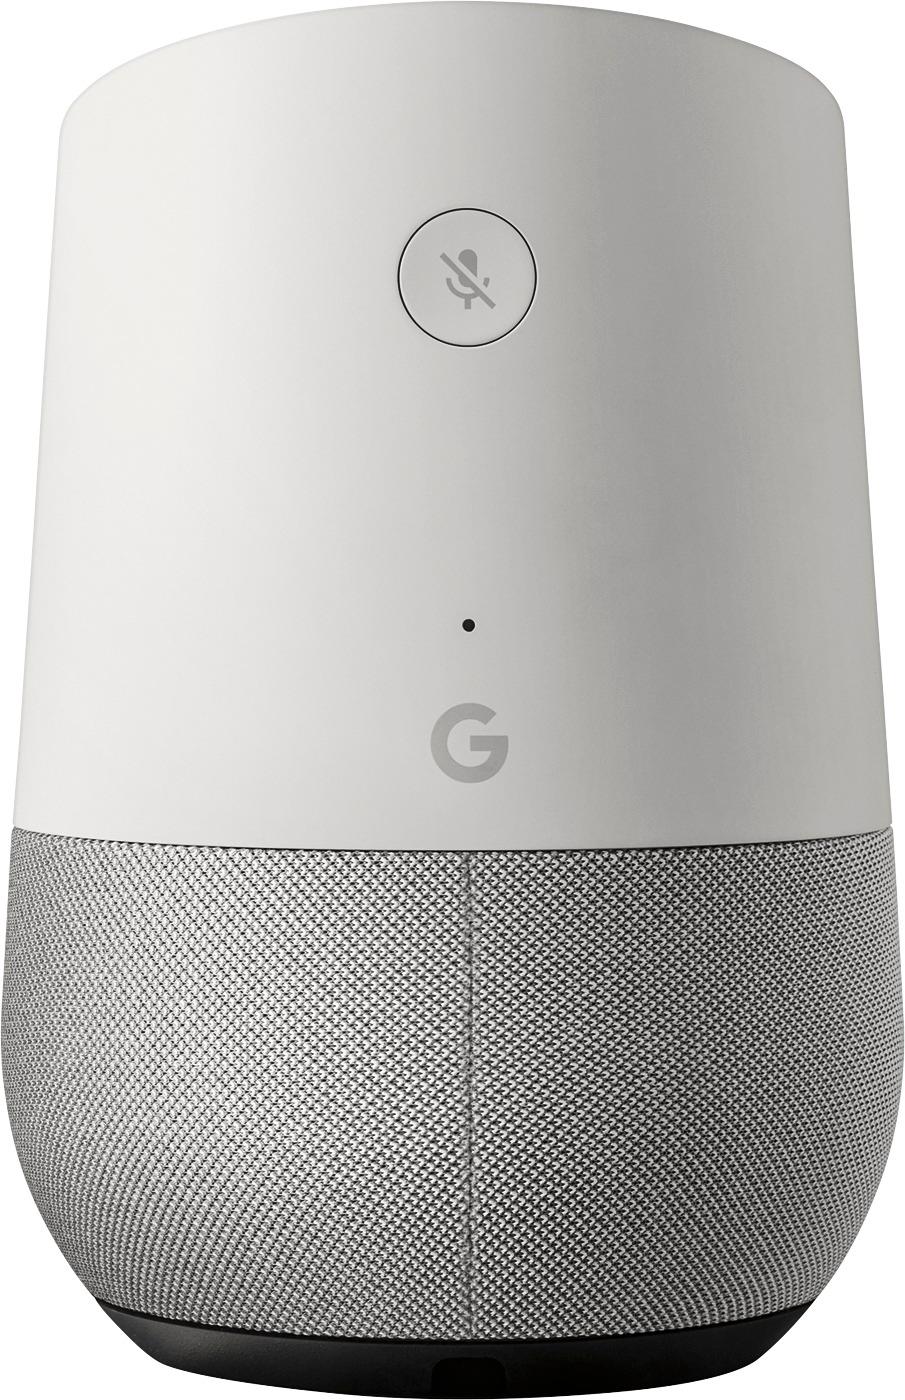 Rosa después de esto Acurrucarse Best Buy: Home Smart Speaker with Google Assistant White/Slate Home